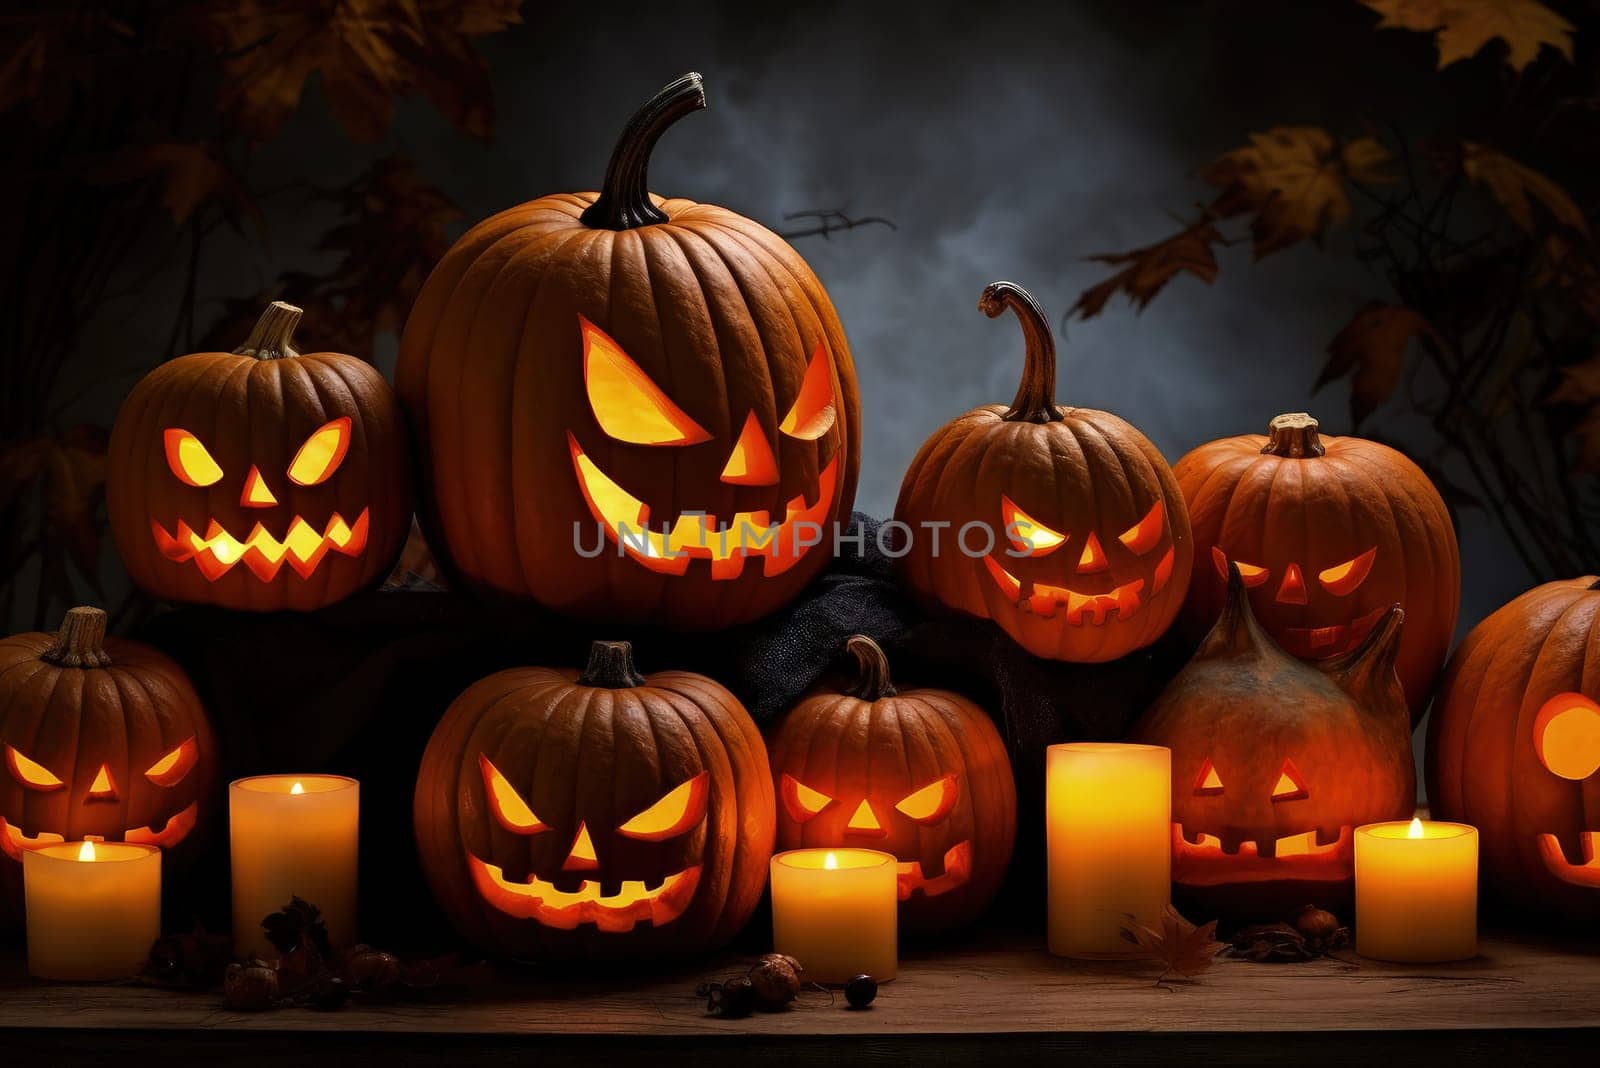 Halloween jack o lantern with pumpkins by simpson33